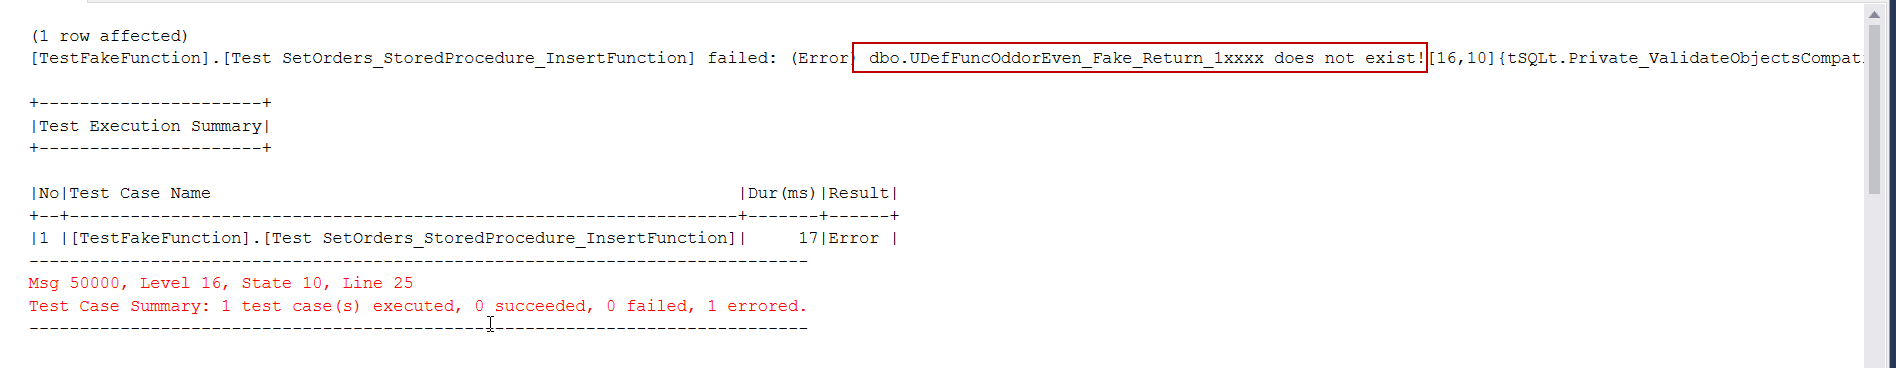 SQL Unit testing FakeFunction does not exists error image